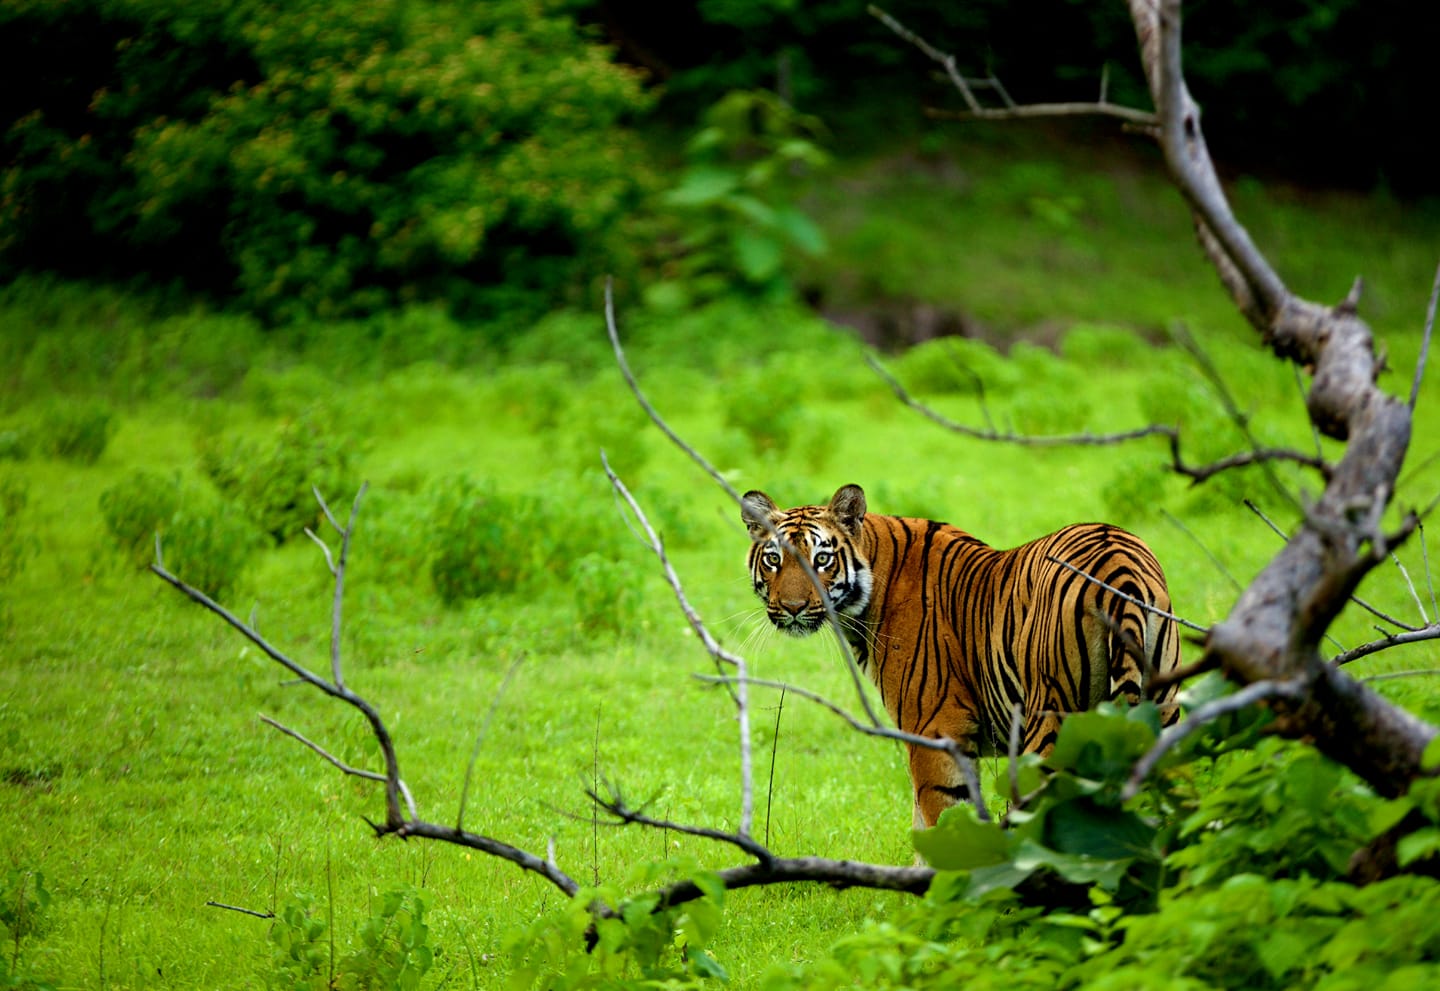 Monsoon Queen- Tigress at Tipeshwar Wild Life Sanctuary